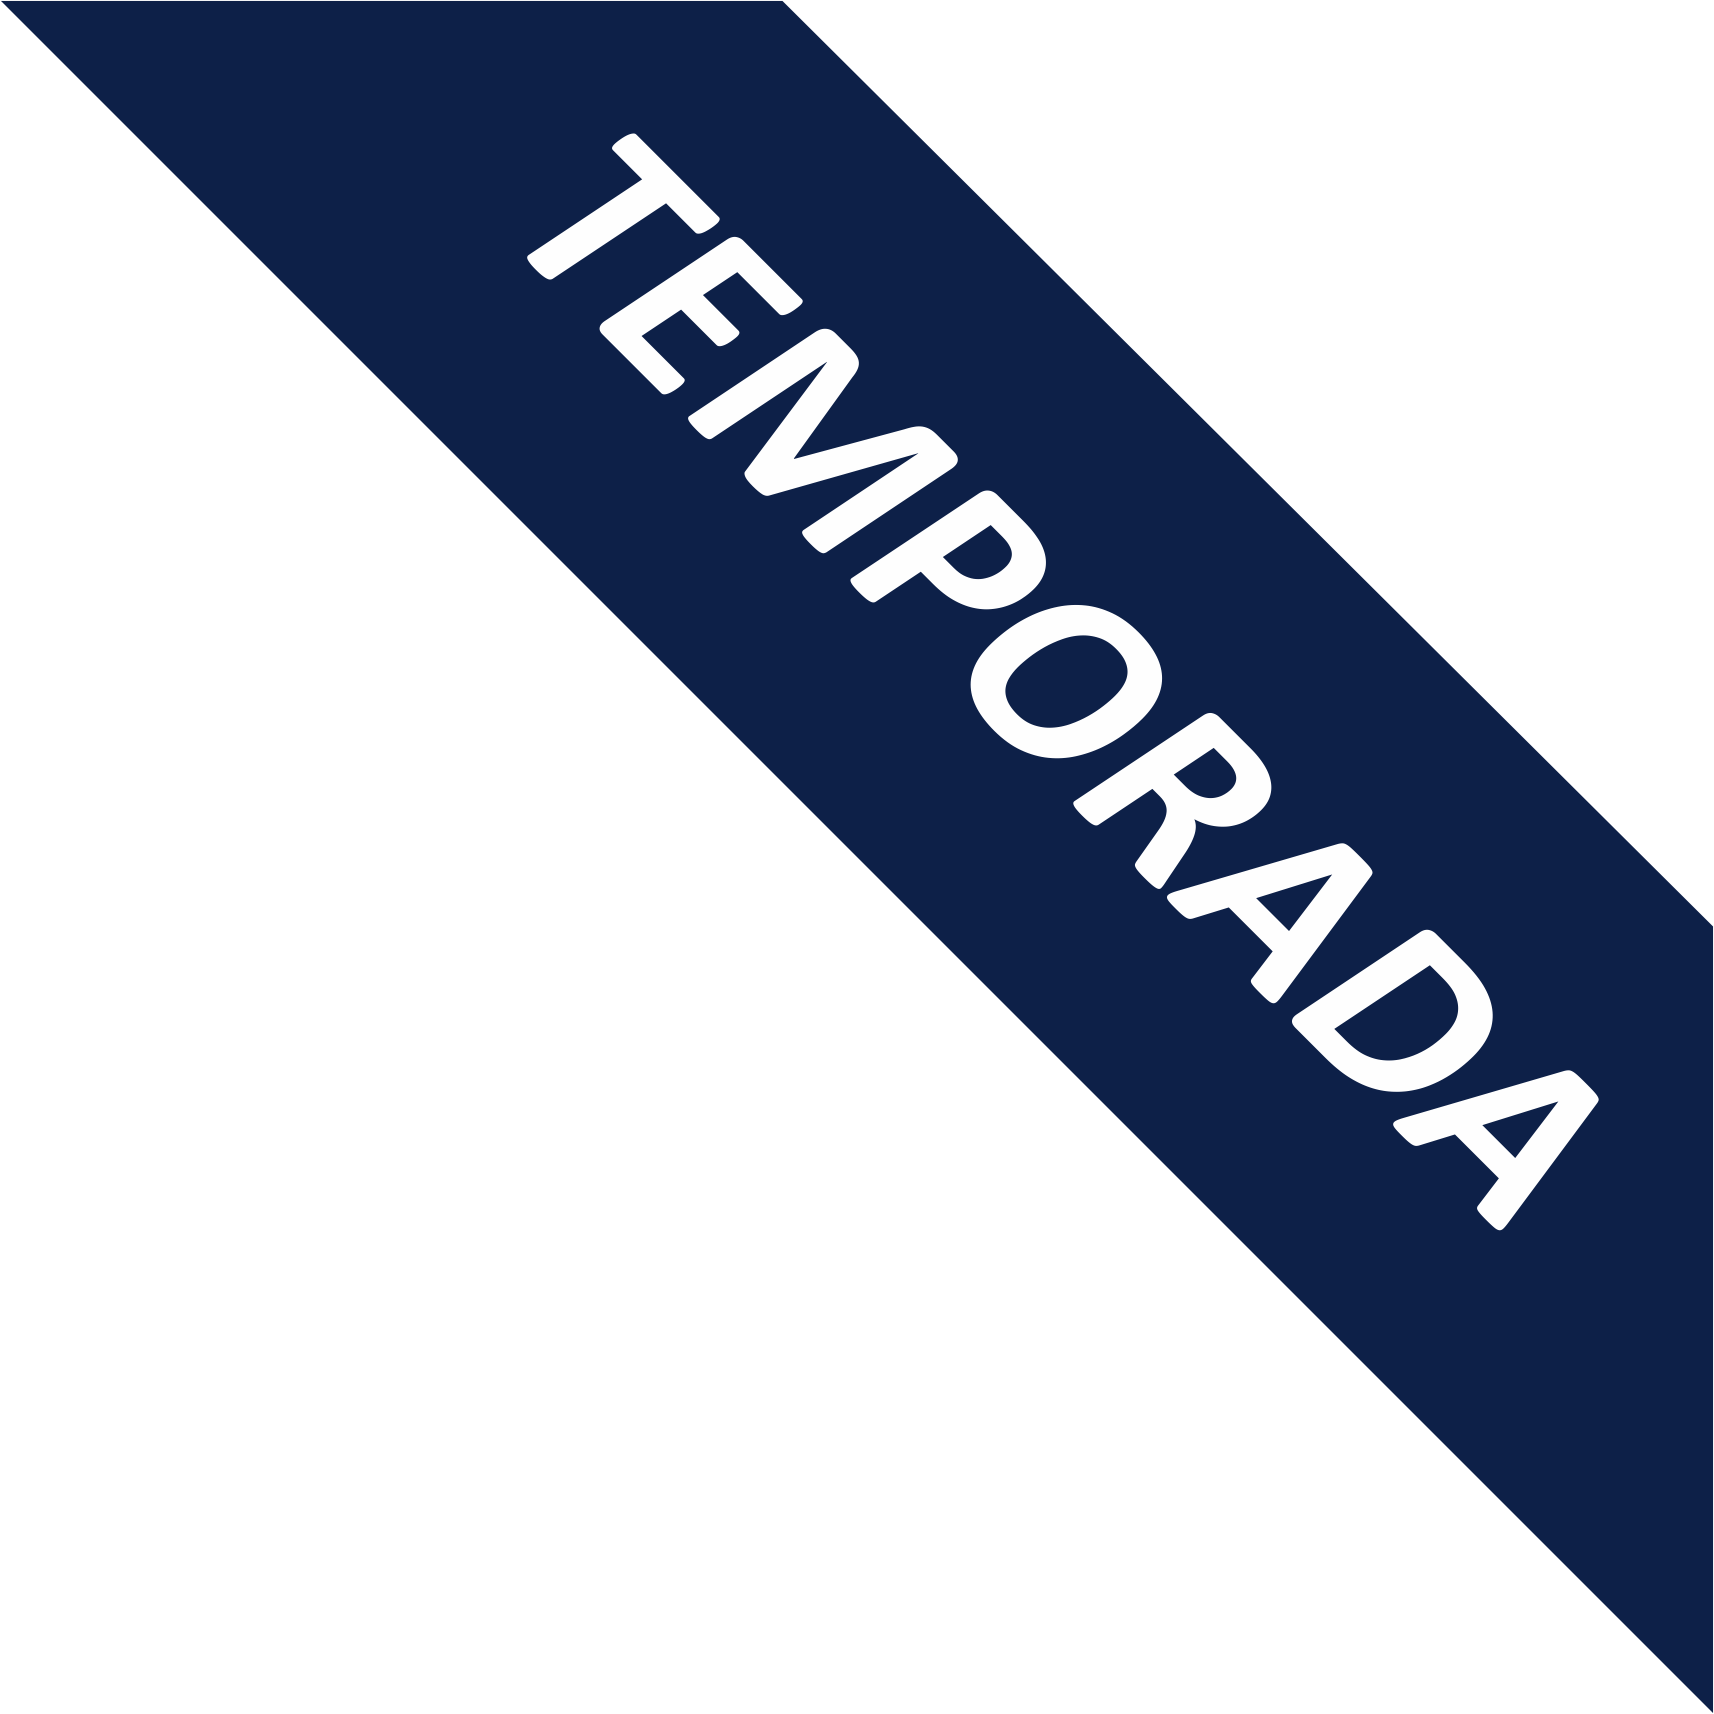 temporary